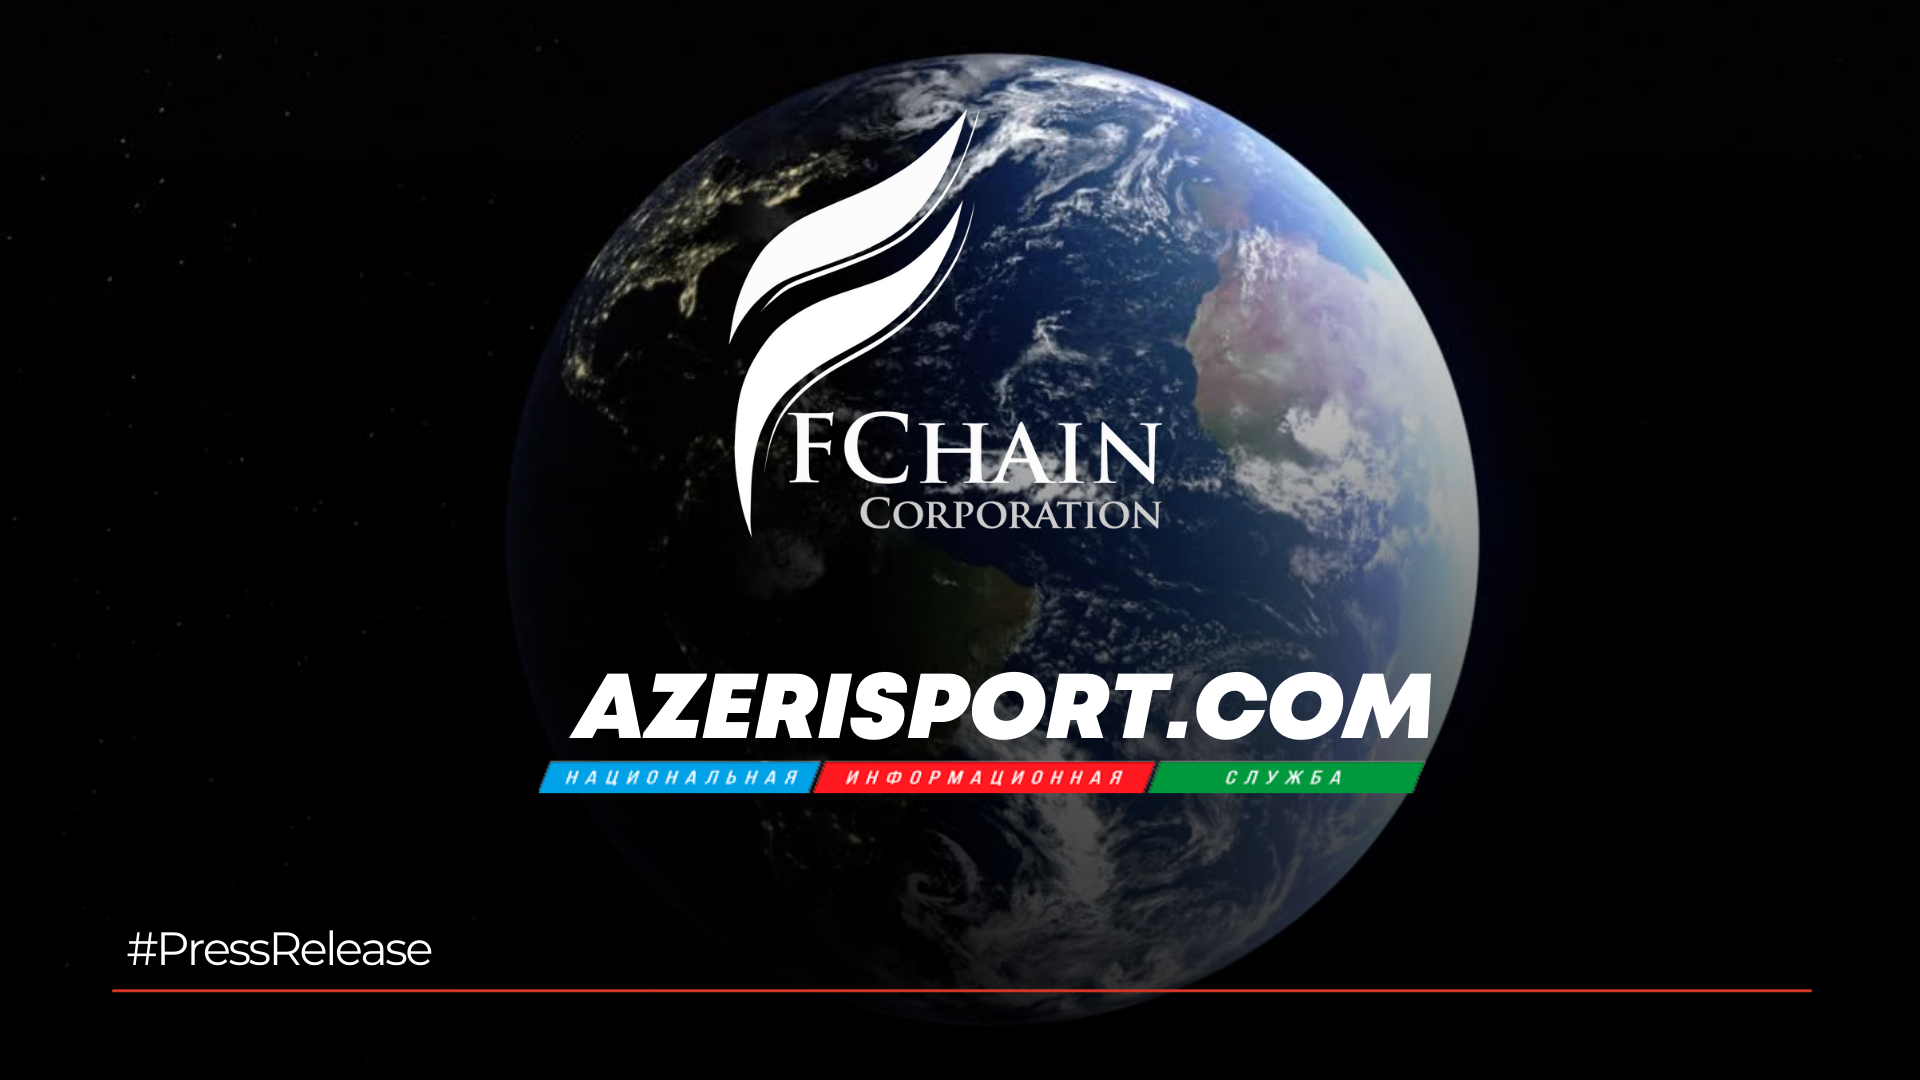 AZERISPORT has Become FCHAIN’s Official Media Partner